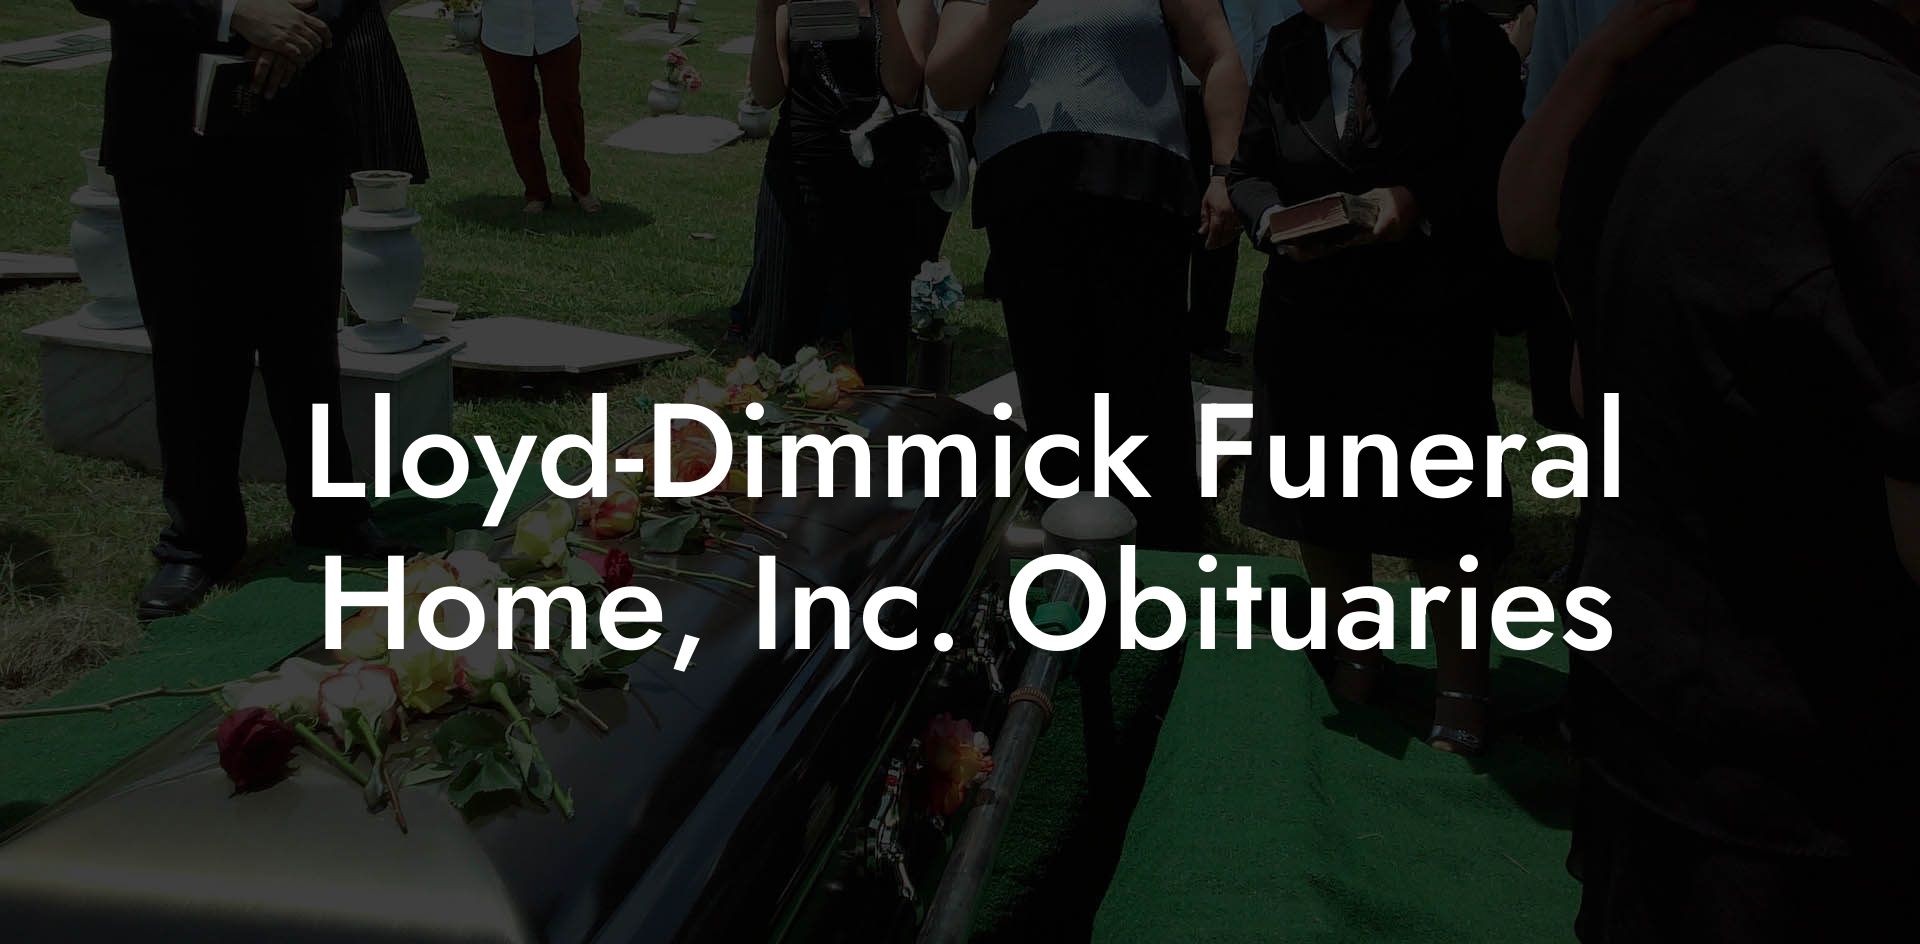 Lloyd-Dimmick Funeral Home, Inc. Obituaries